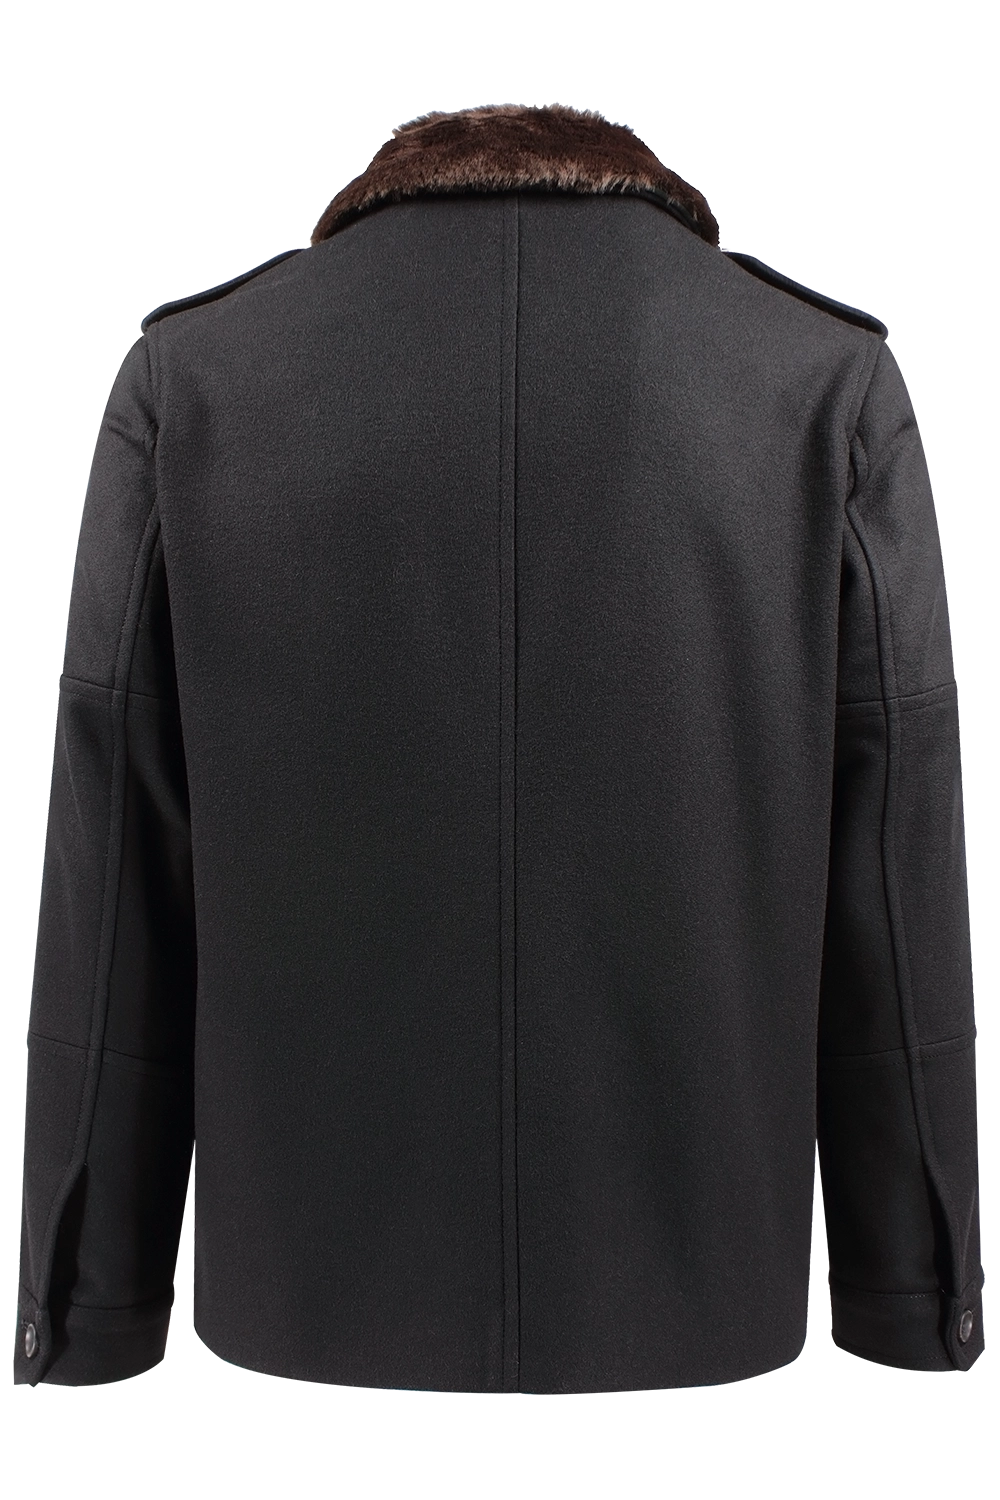 Field jacket lana nera collo ecopelliccia retro